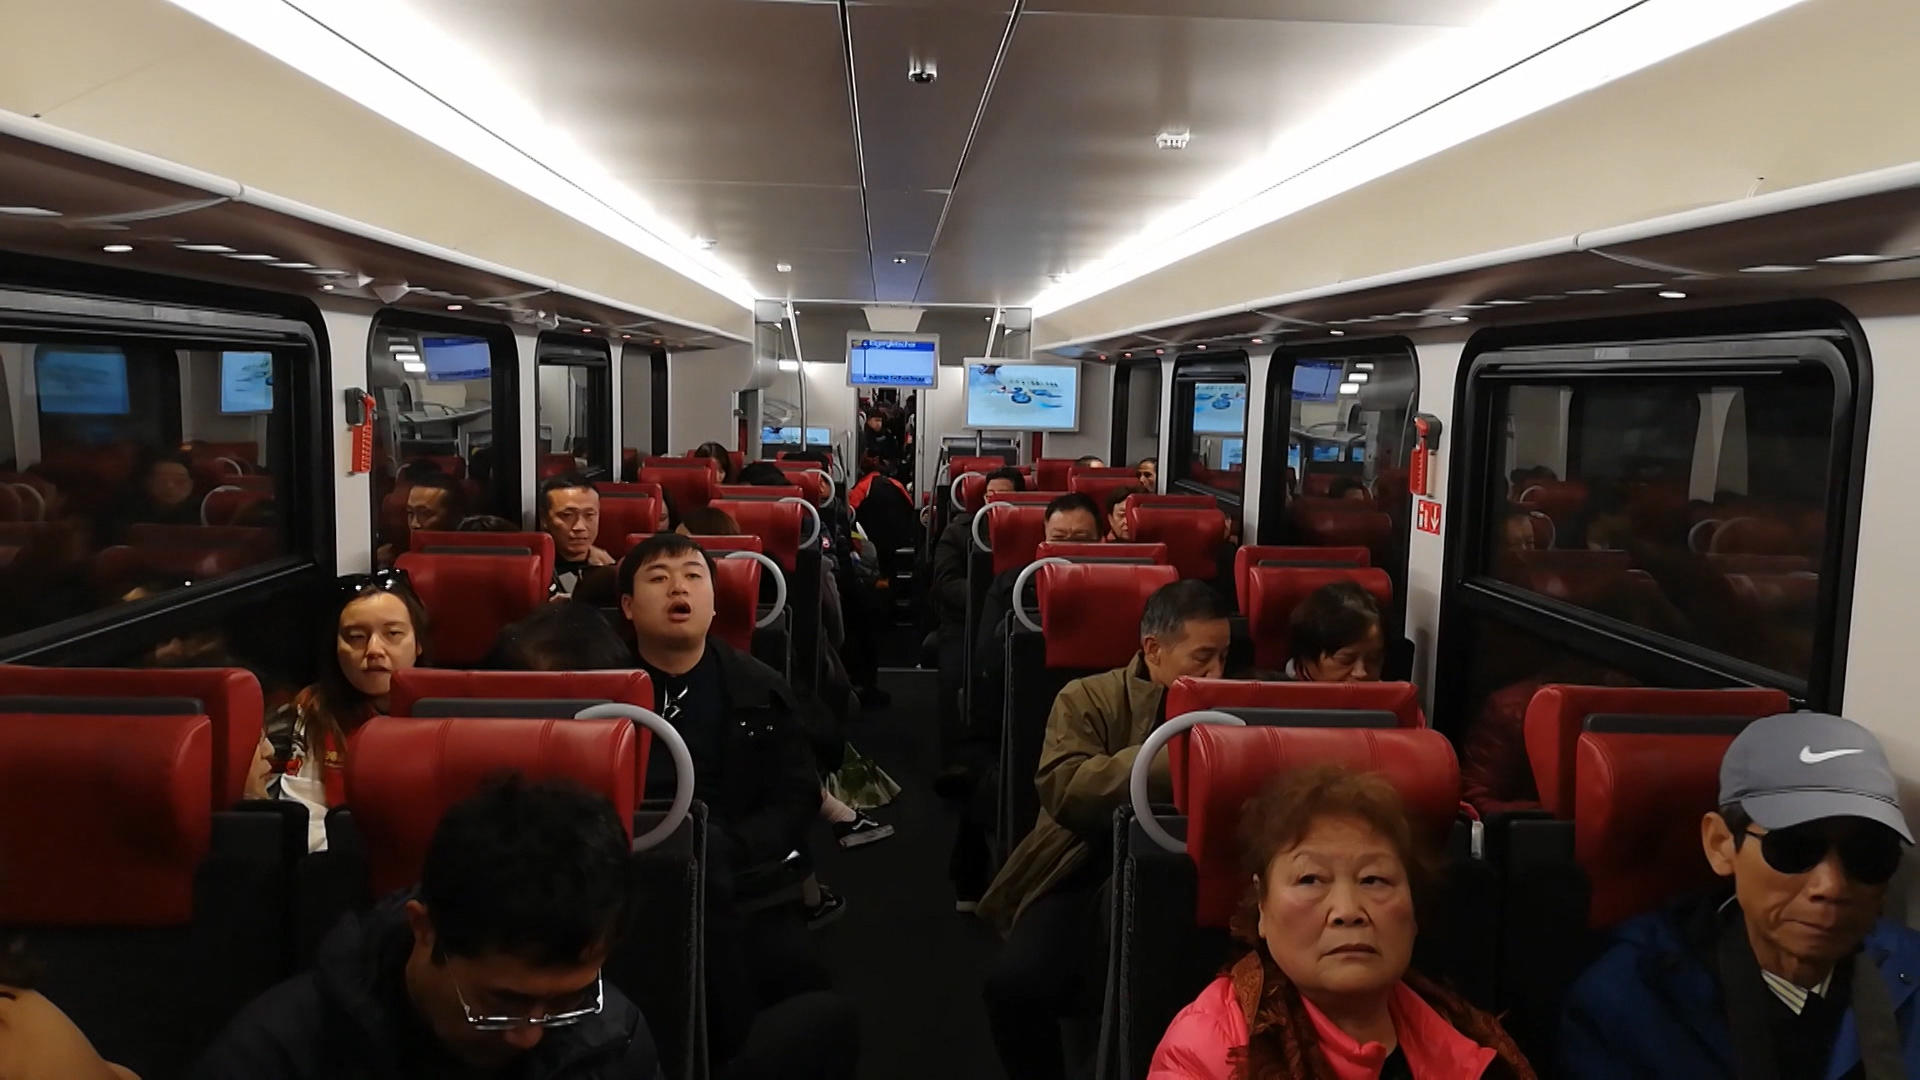 Asians on Jungfrau Railway train carriage